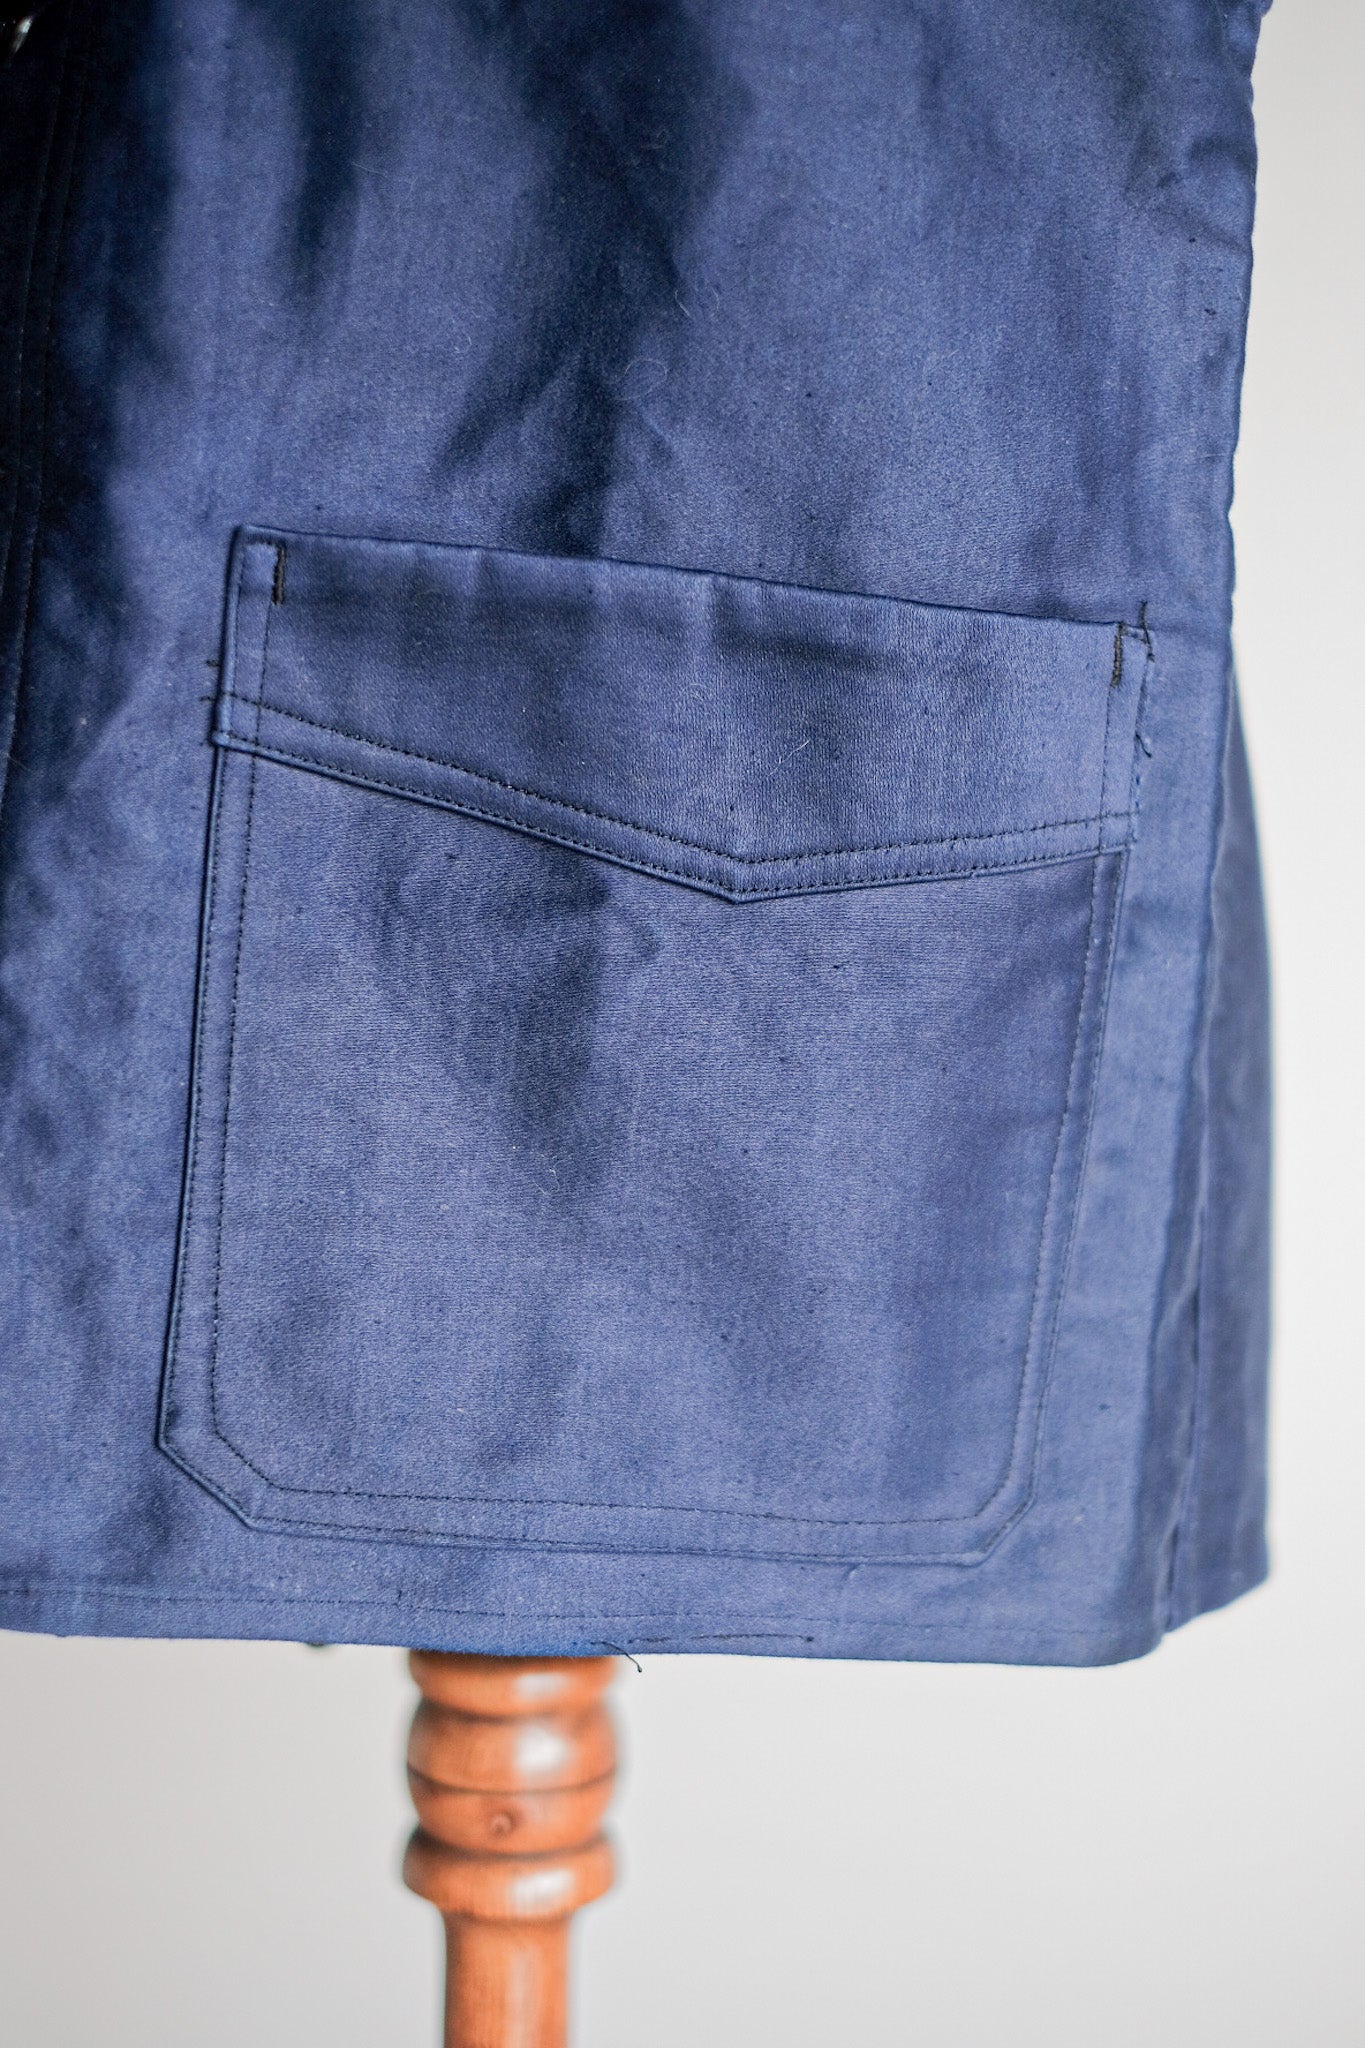 [~ 40's] French Vintage Blue Moleskin Work Jacket "Le Mont Stock" "Dead Stock"